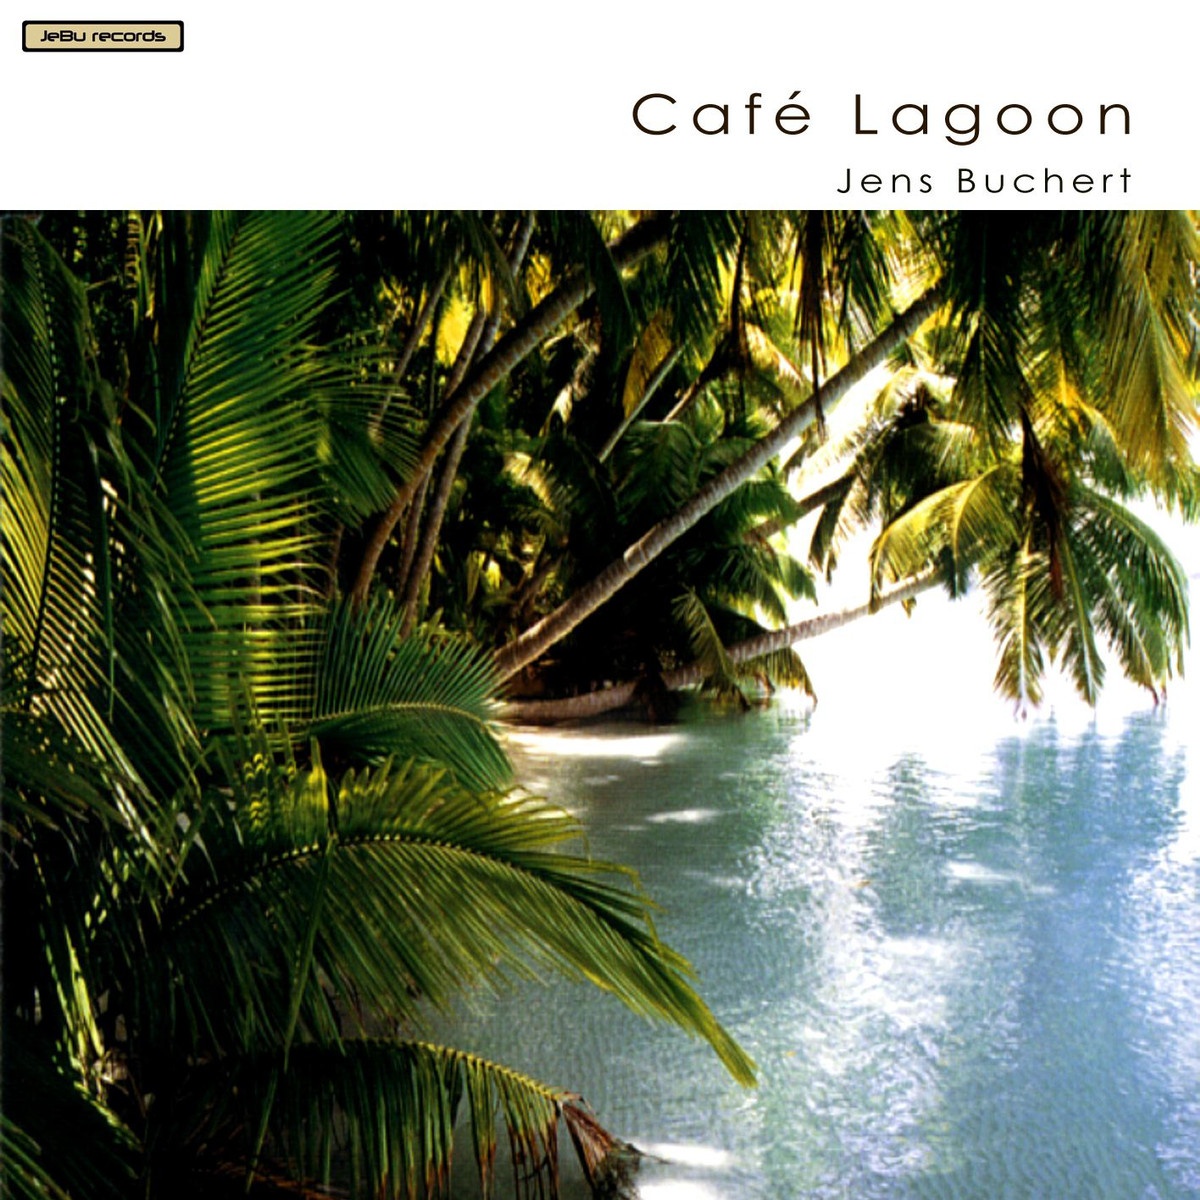 Cafe Lagoon